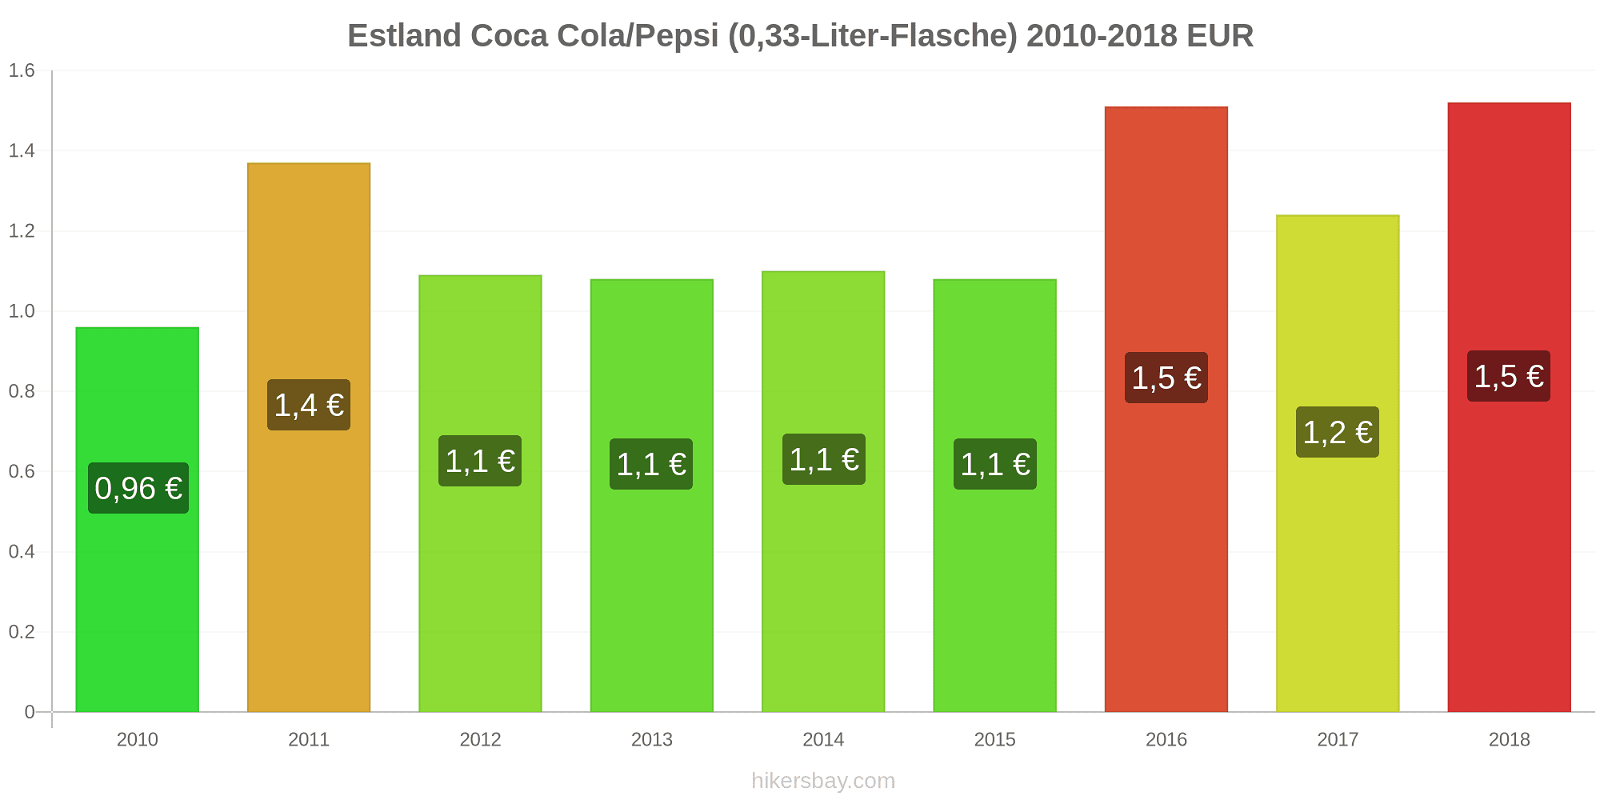 Estland Preisänderungen Coke/Pepsi (0,33-Liter-Flasche) hikersbay.com